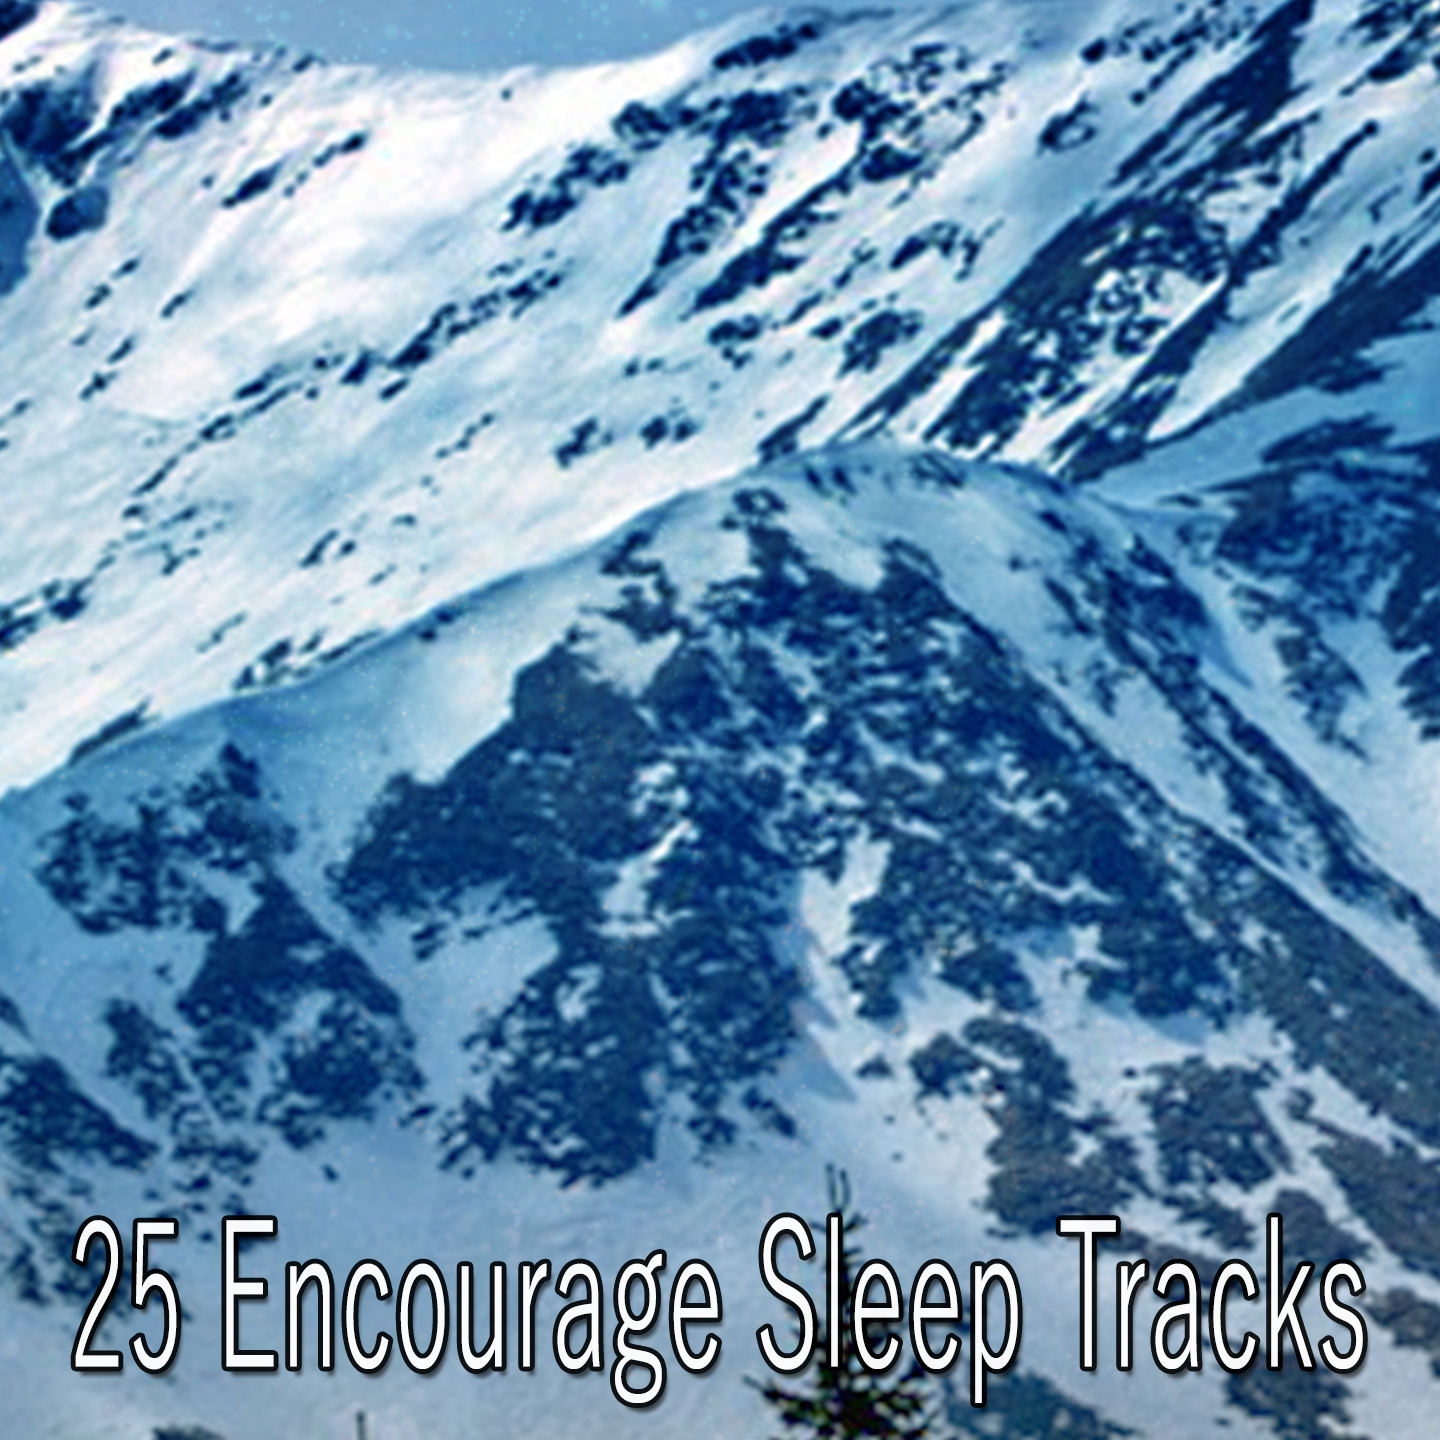 25 Encourage Sleep Tracks